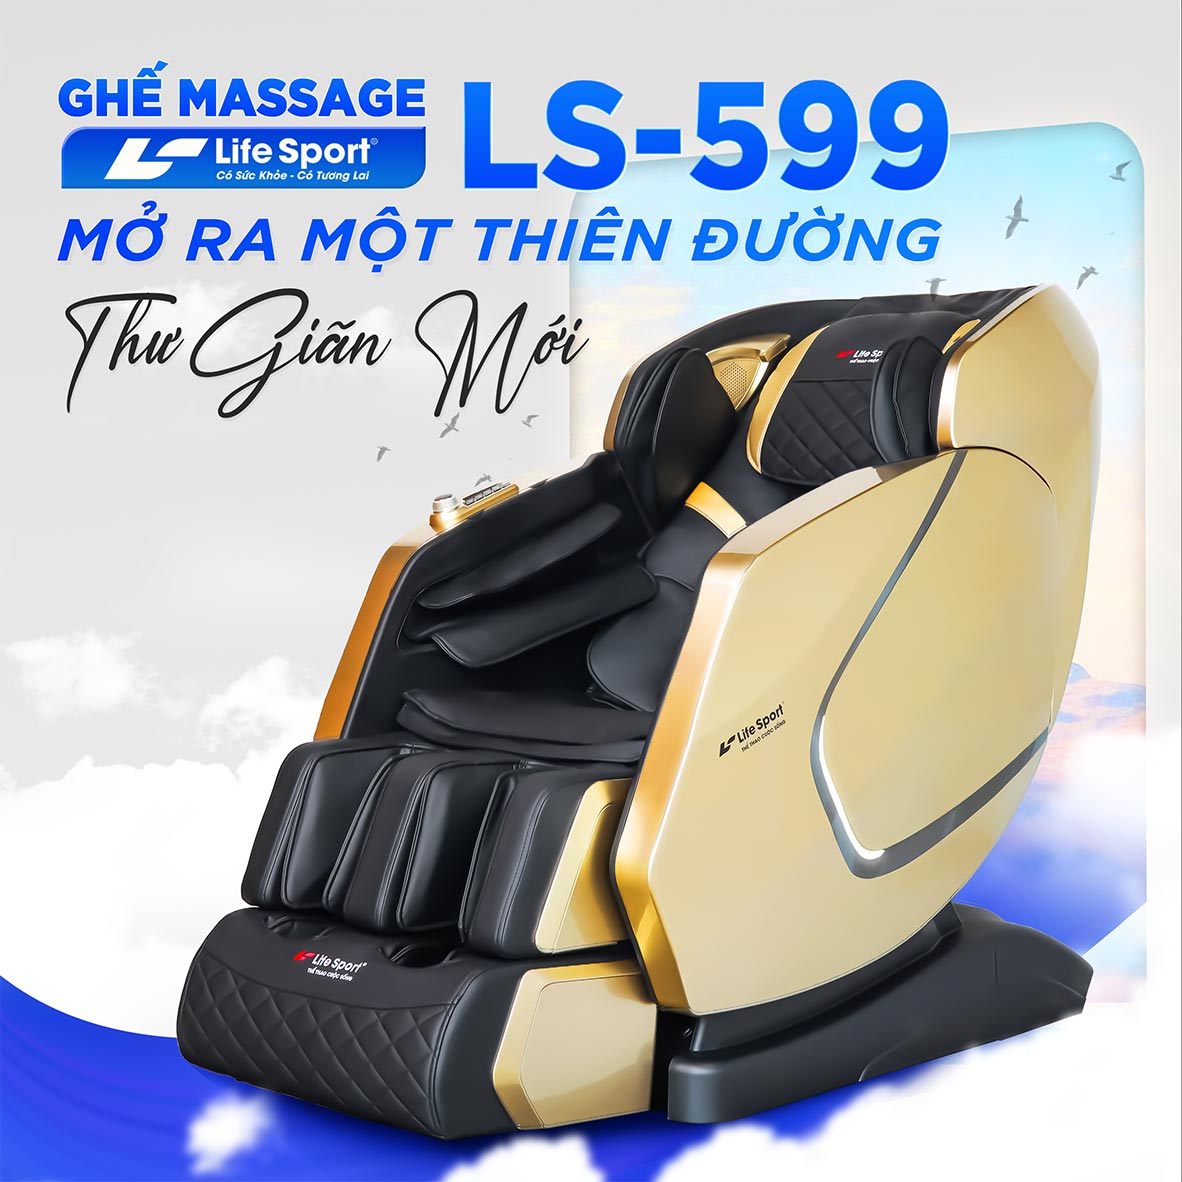 ghe massage lifesport ls 599 1 1